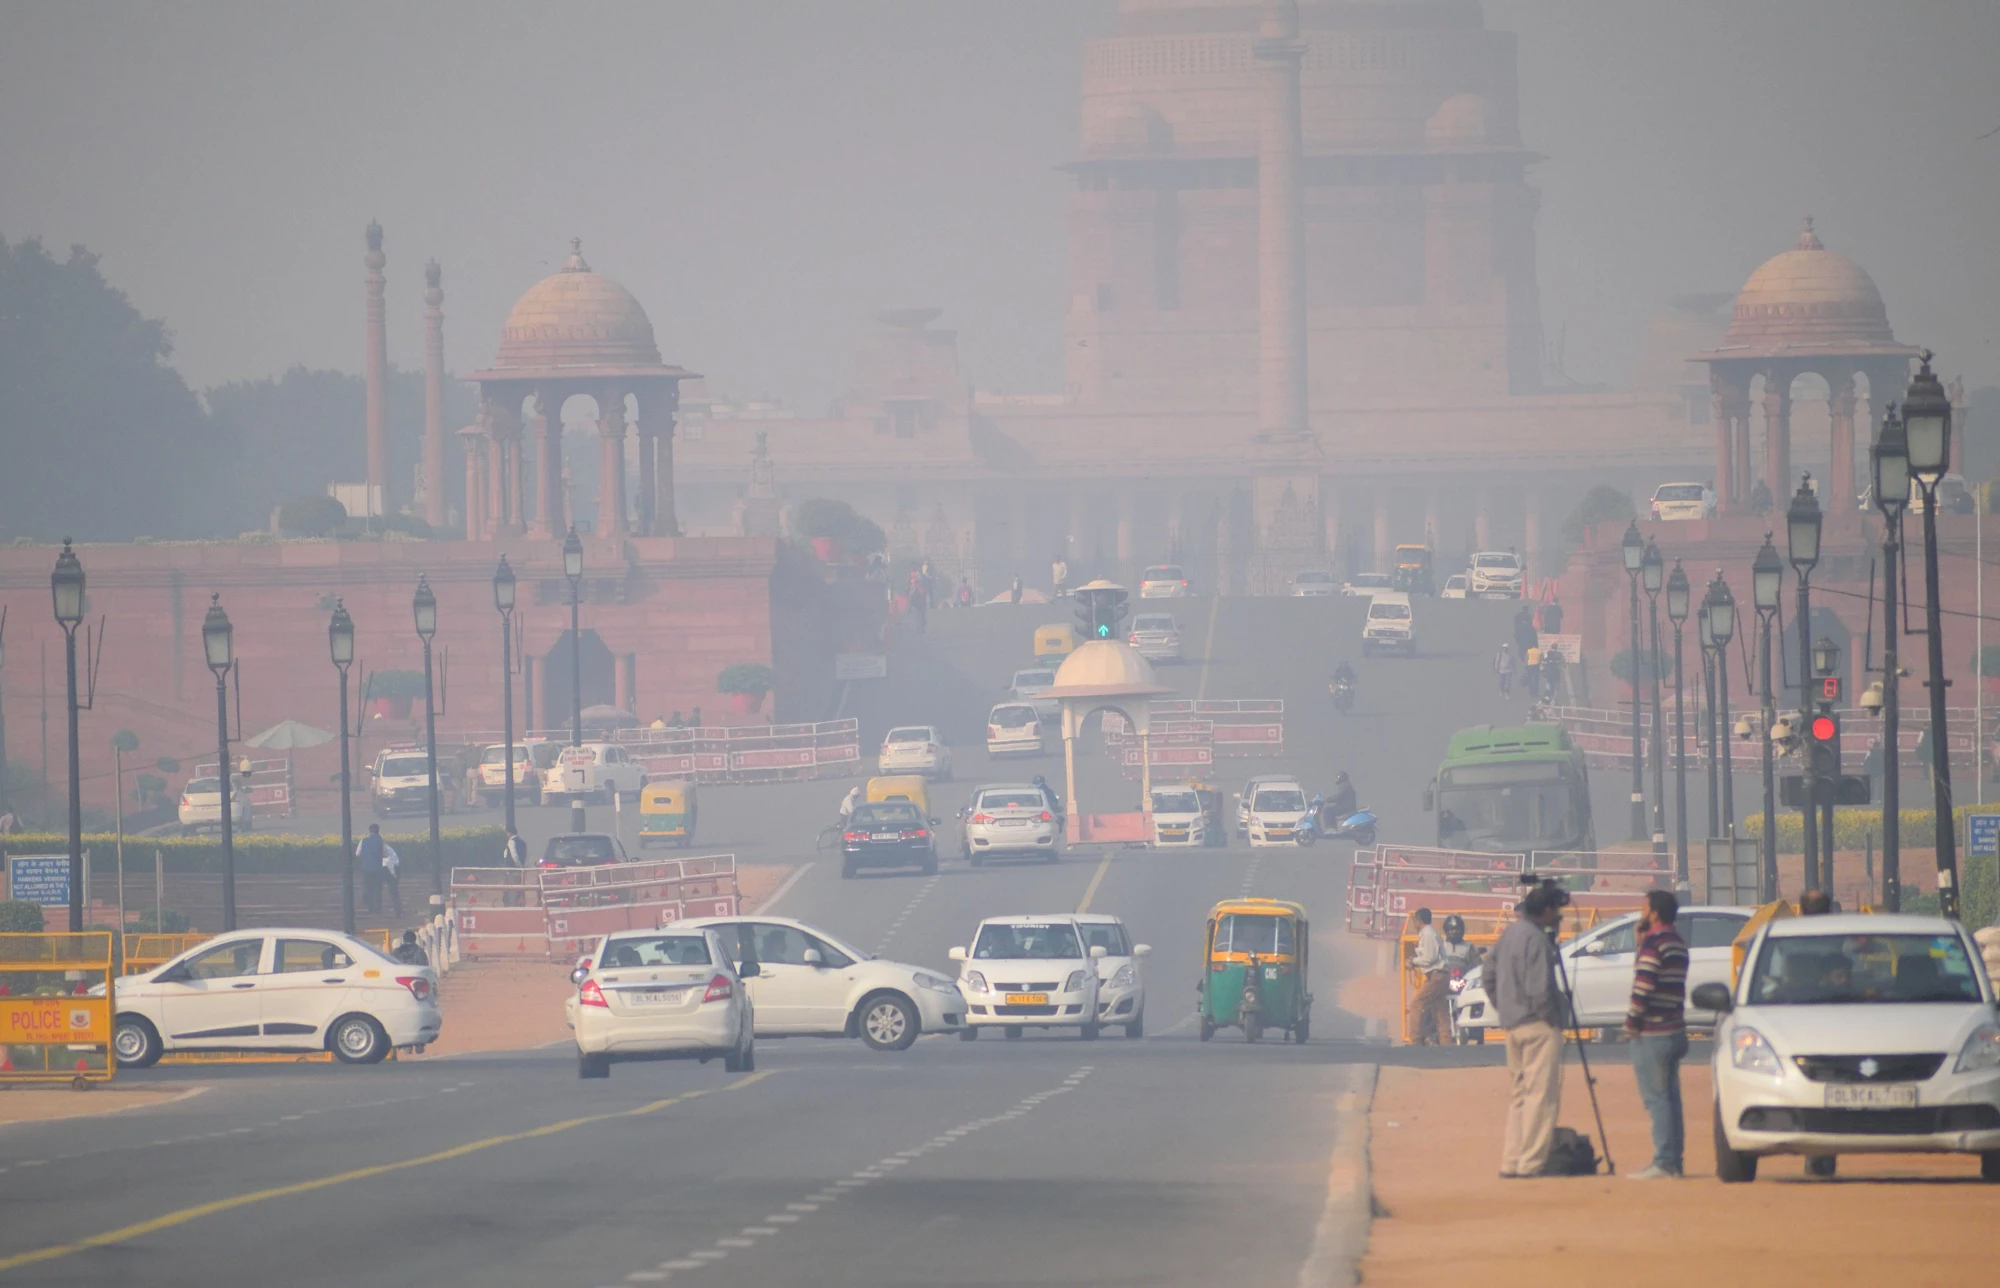 Vehicles moving amidst heavy smog in Delhi, India. Photo: Saurav022 / Shutterstock.com